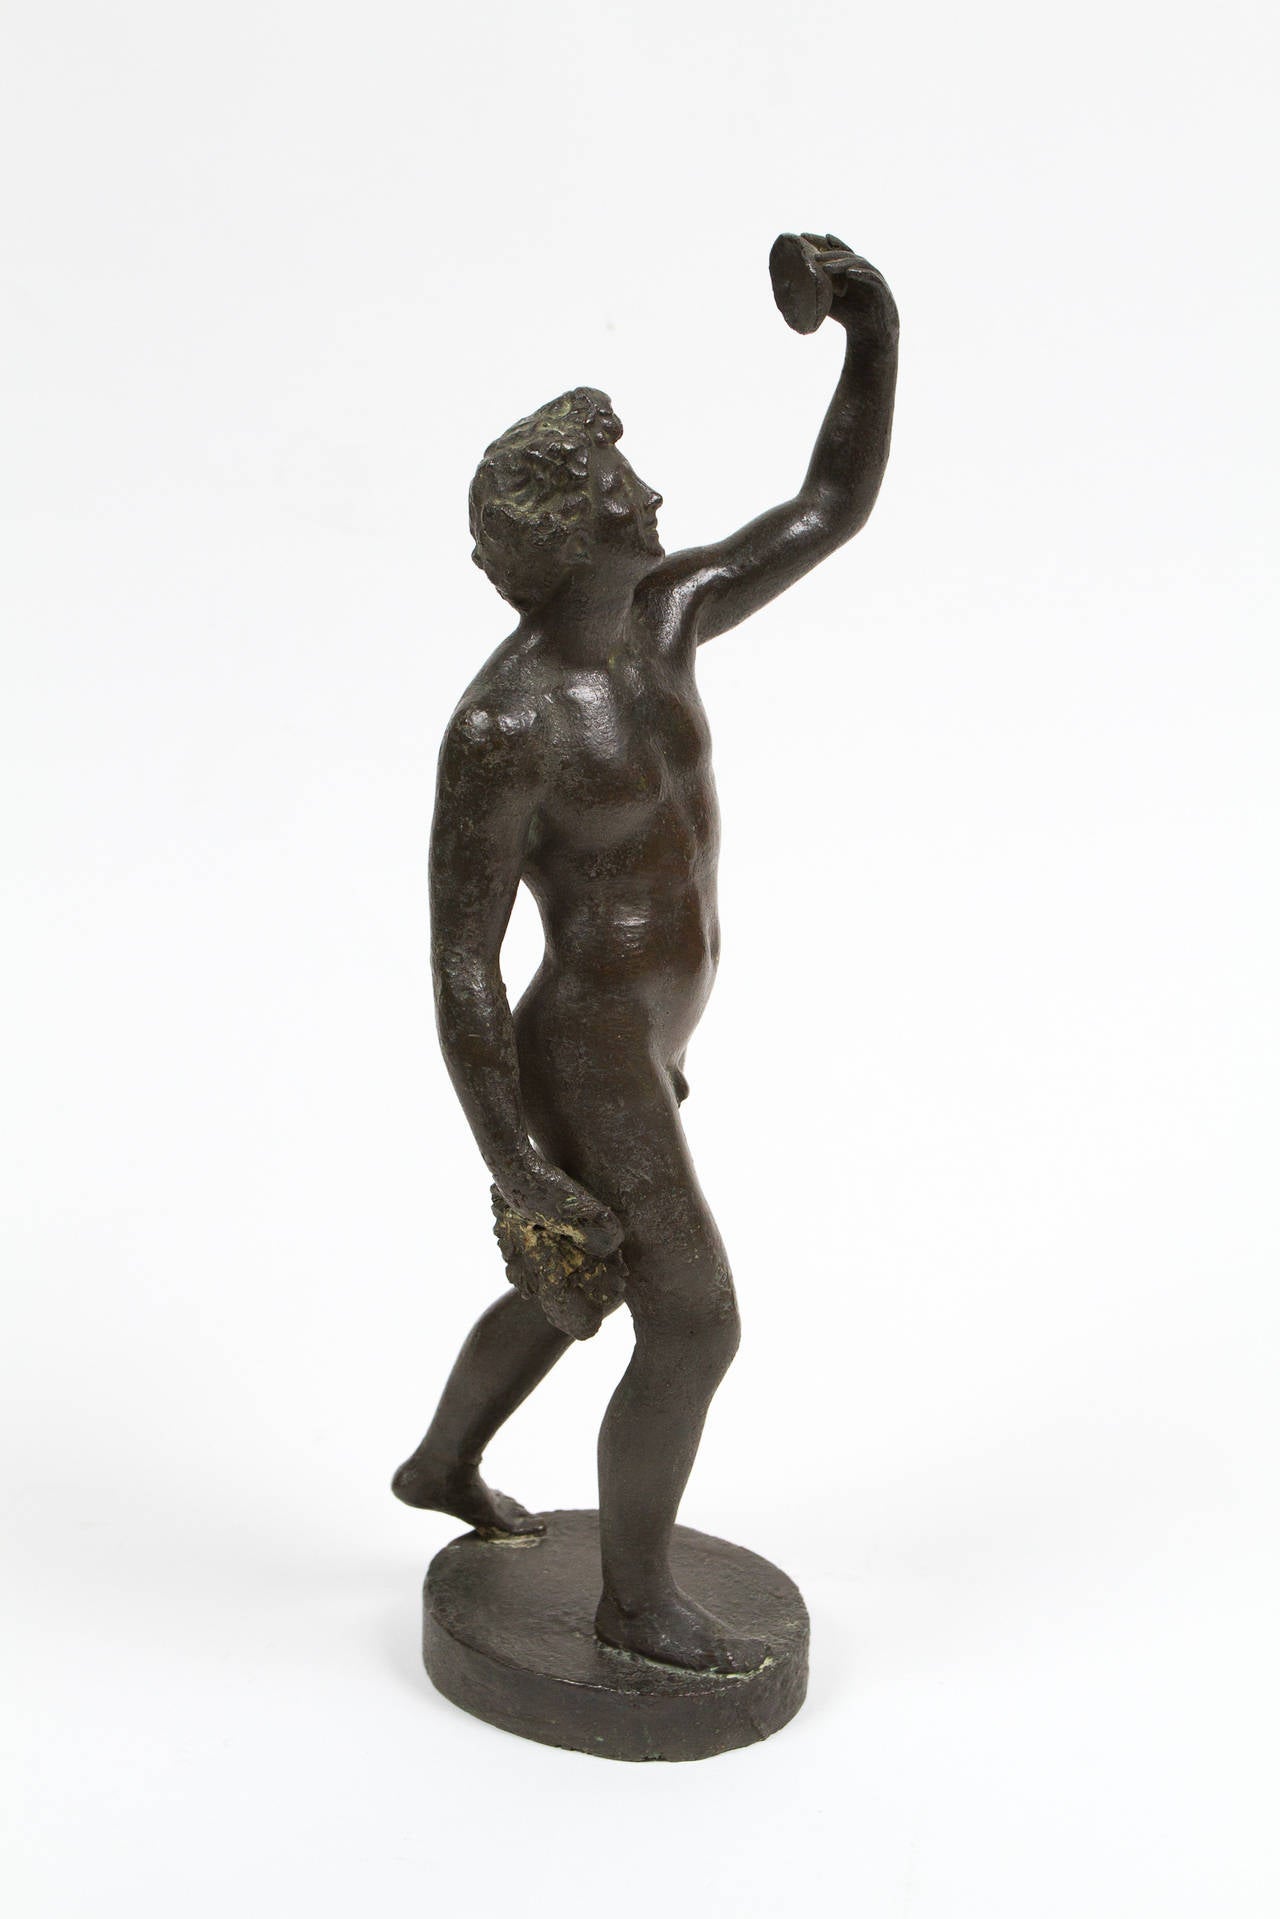 Grand tour bronze after Jacopo Sansovino of Bacchus holding a dish.